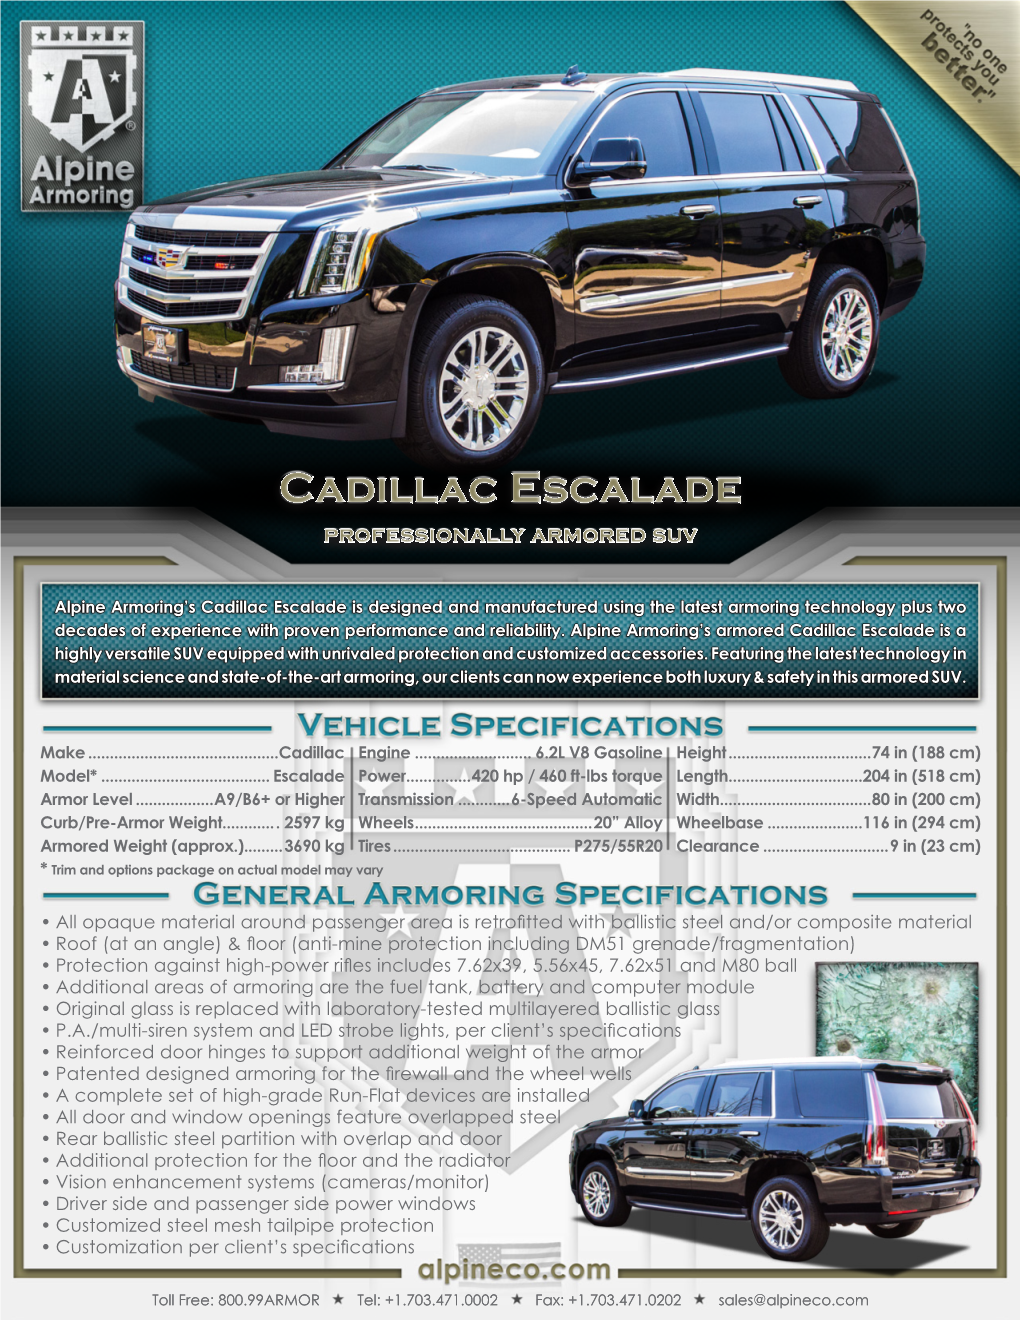 Cadillac Escalade Professionally Armored Suv